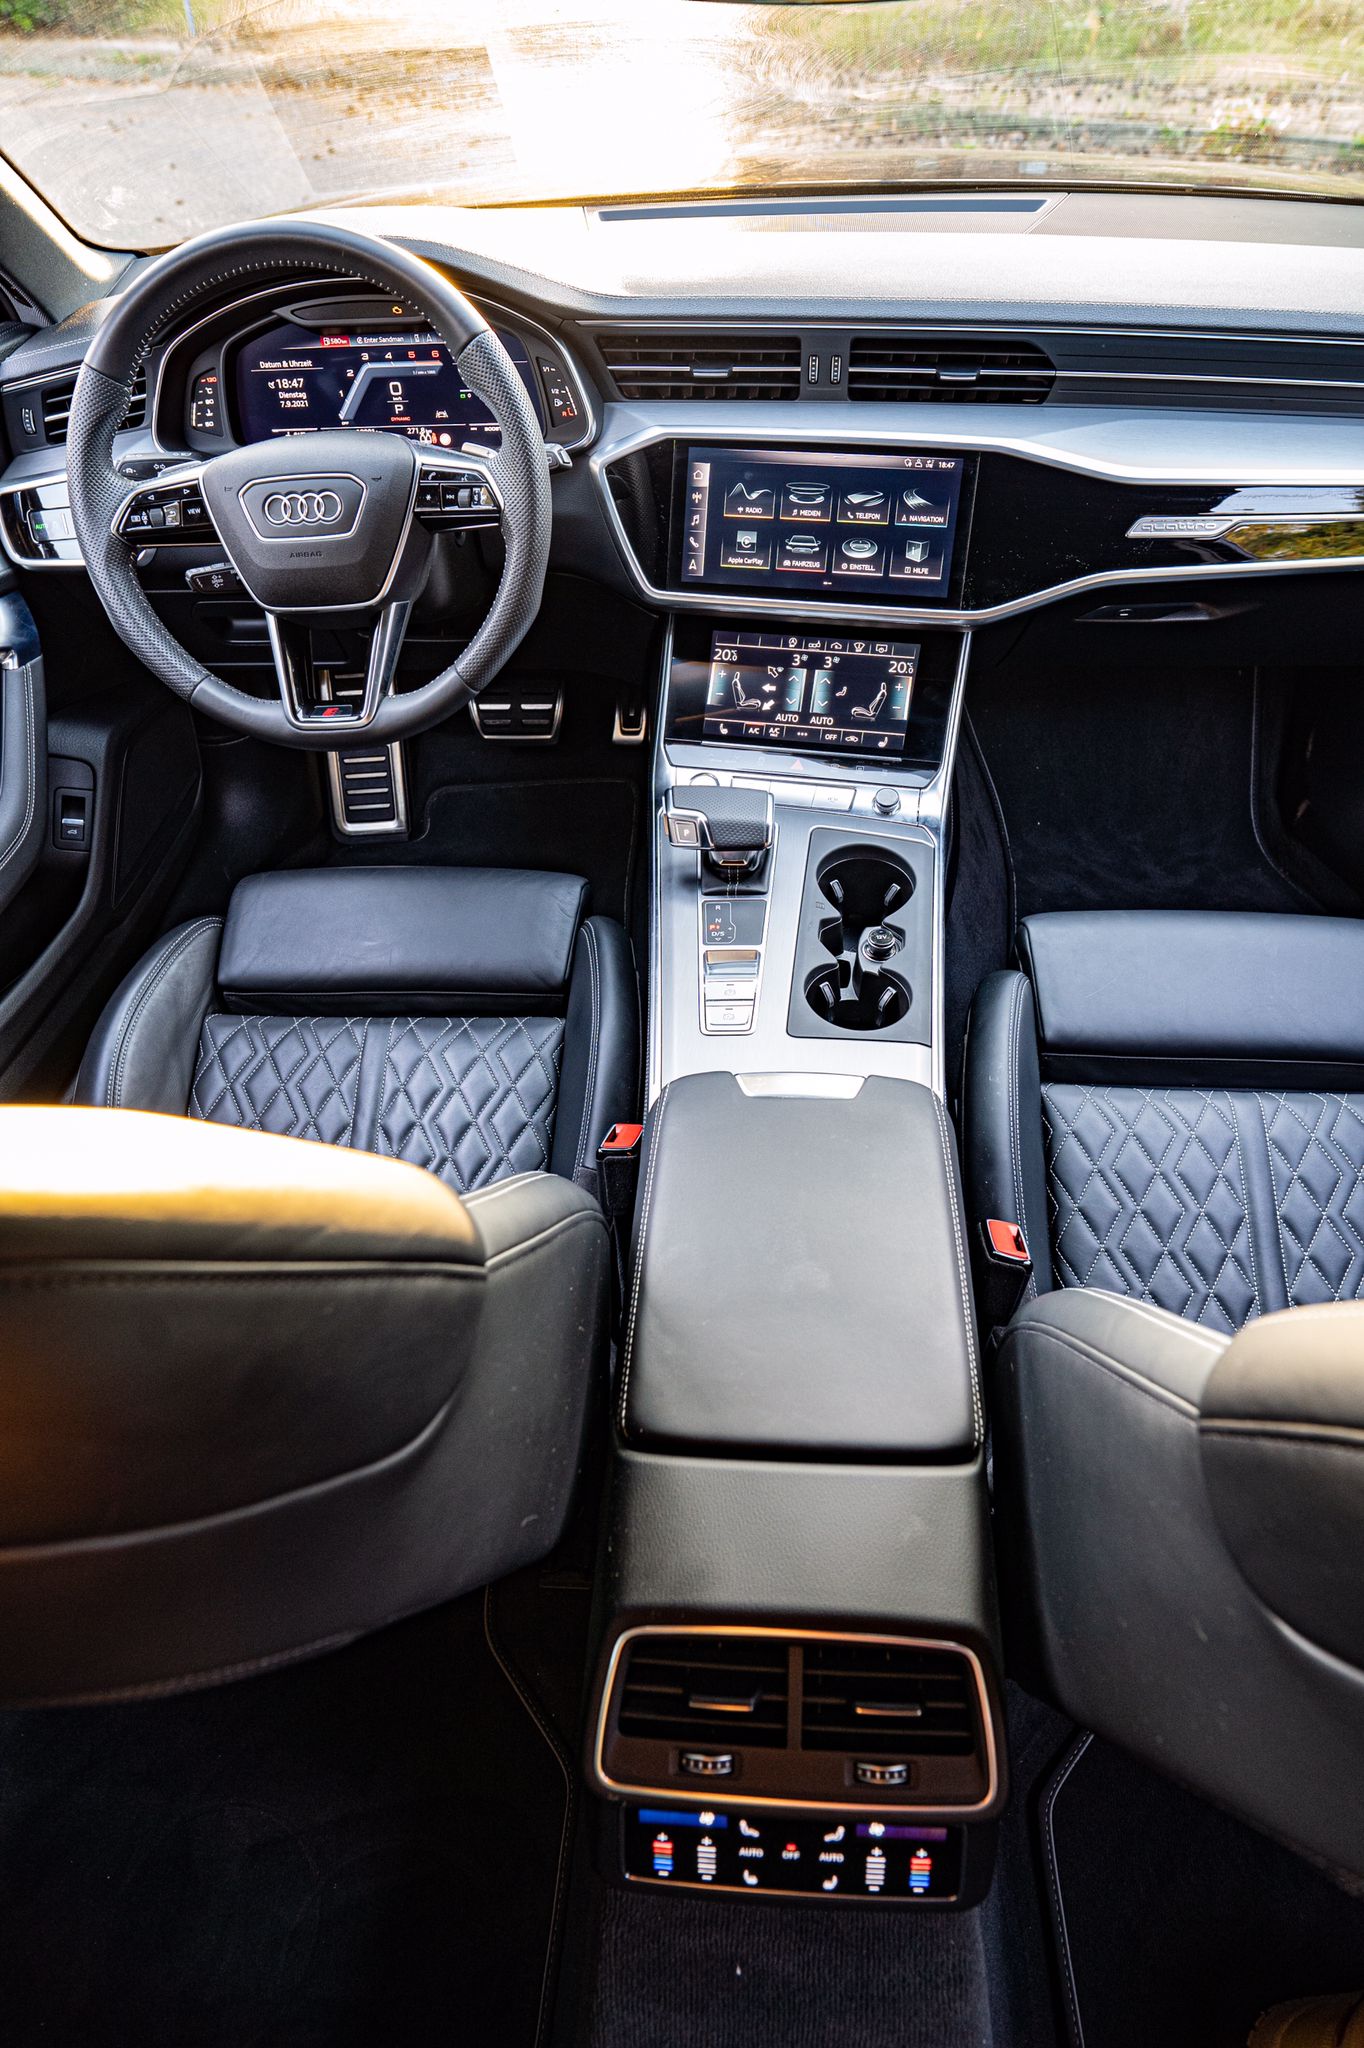 Interieur from Audi S6 ABT Avant long-term rental